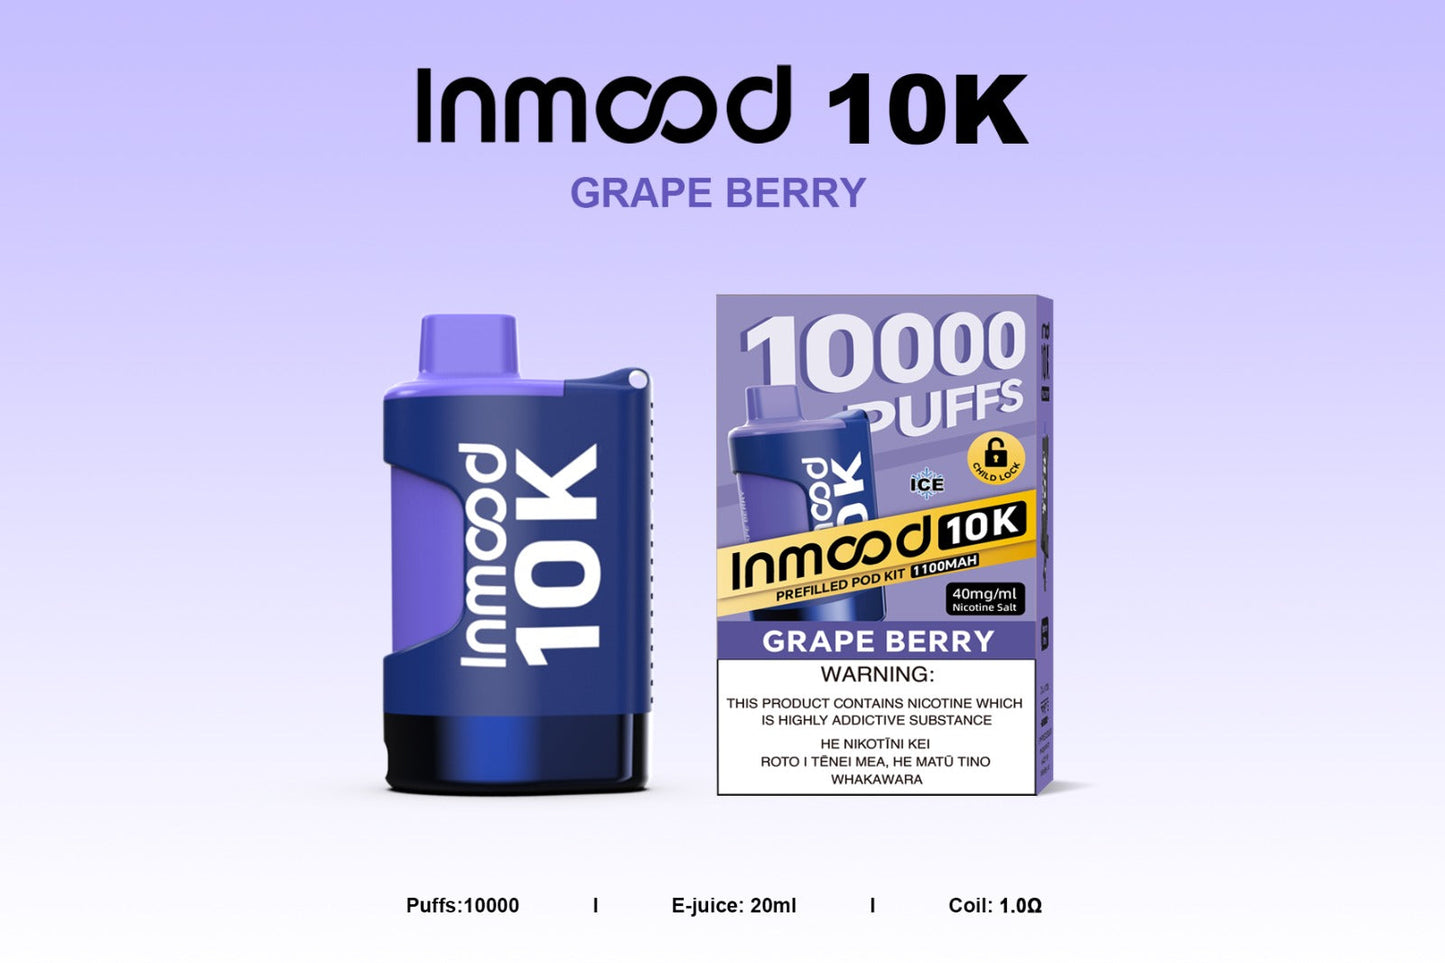 Inmood- 10K Prefilled Pods 10000 puffs -40mg/ml